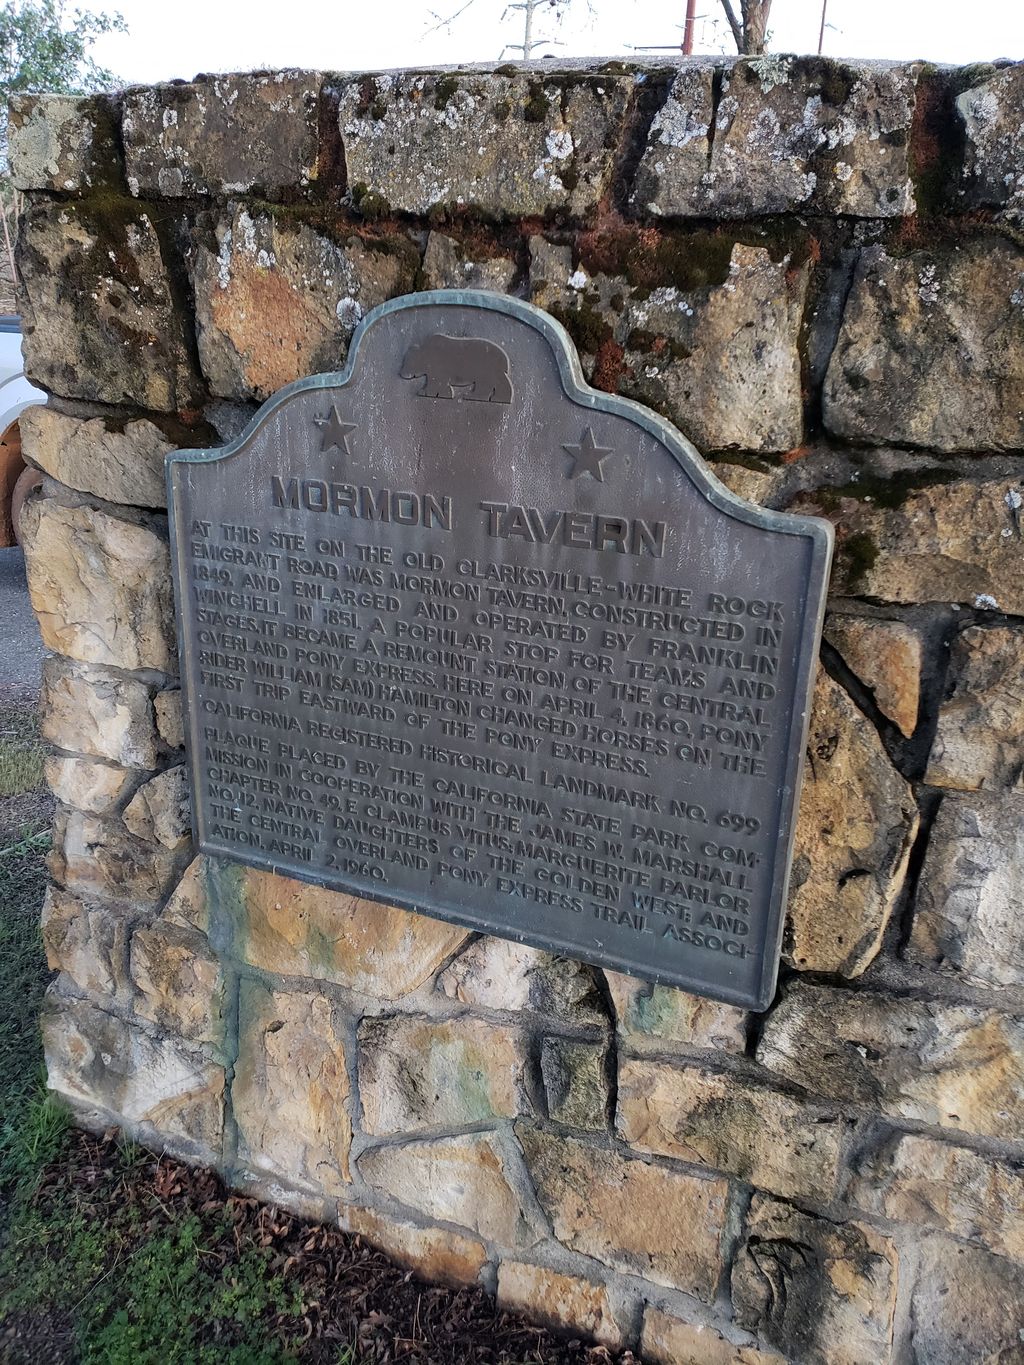 Mormon Tavern California Registered Historical Landmark No.699